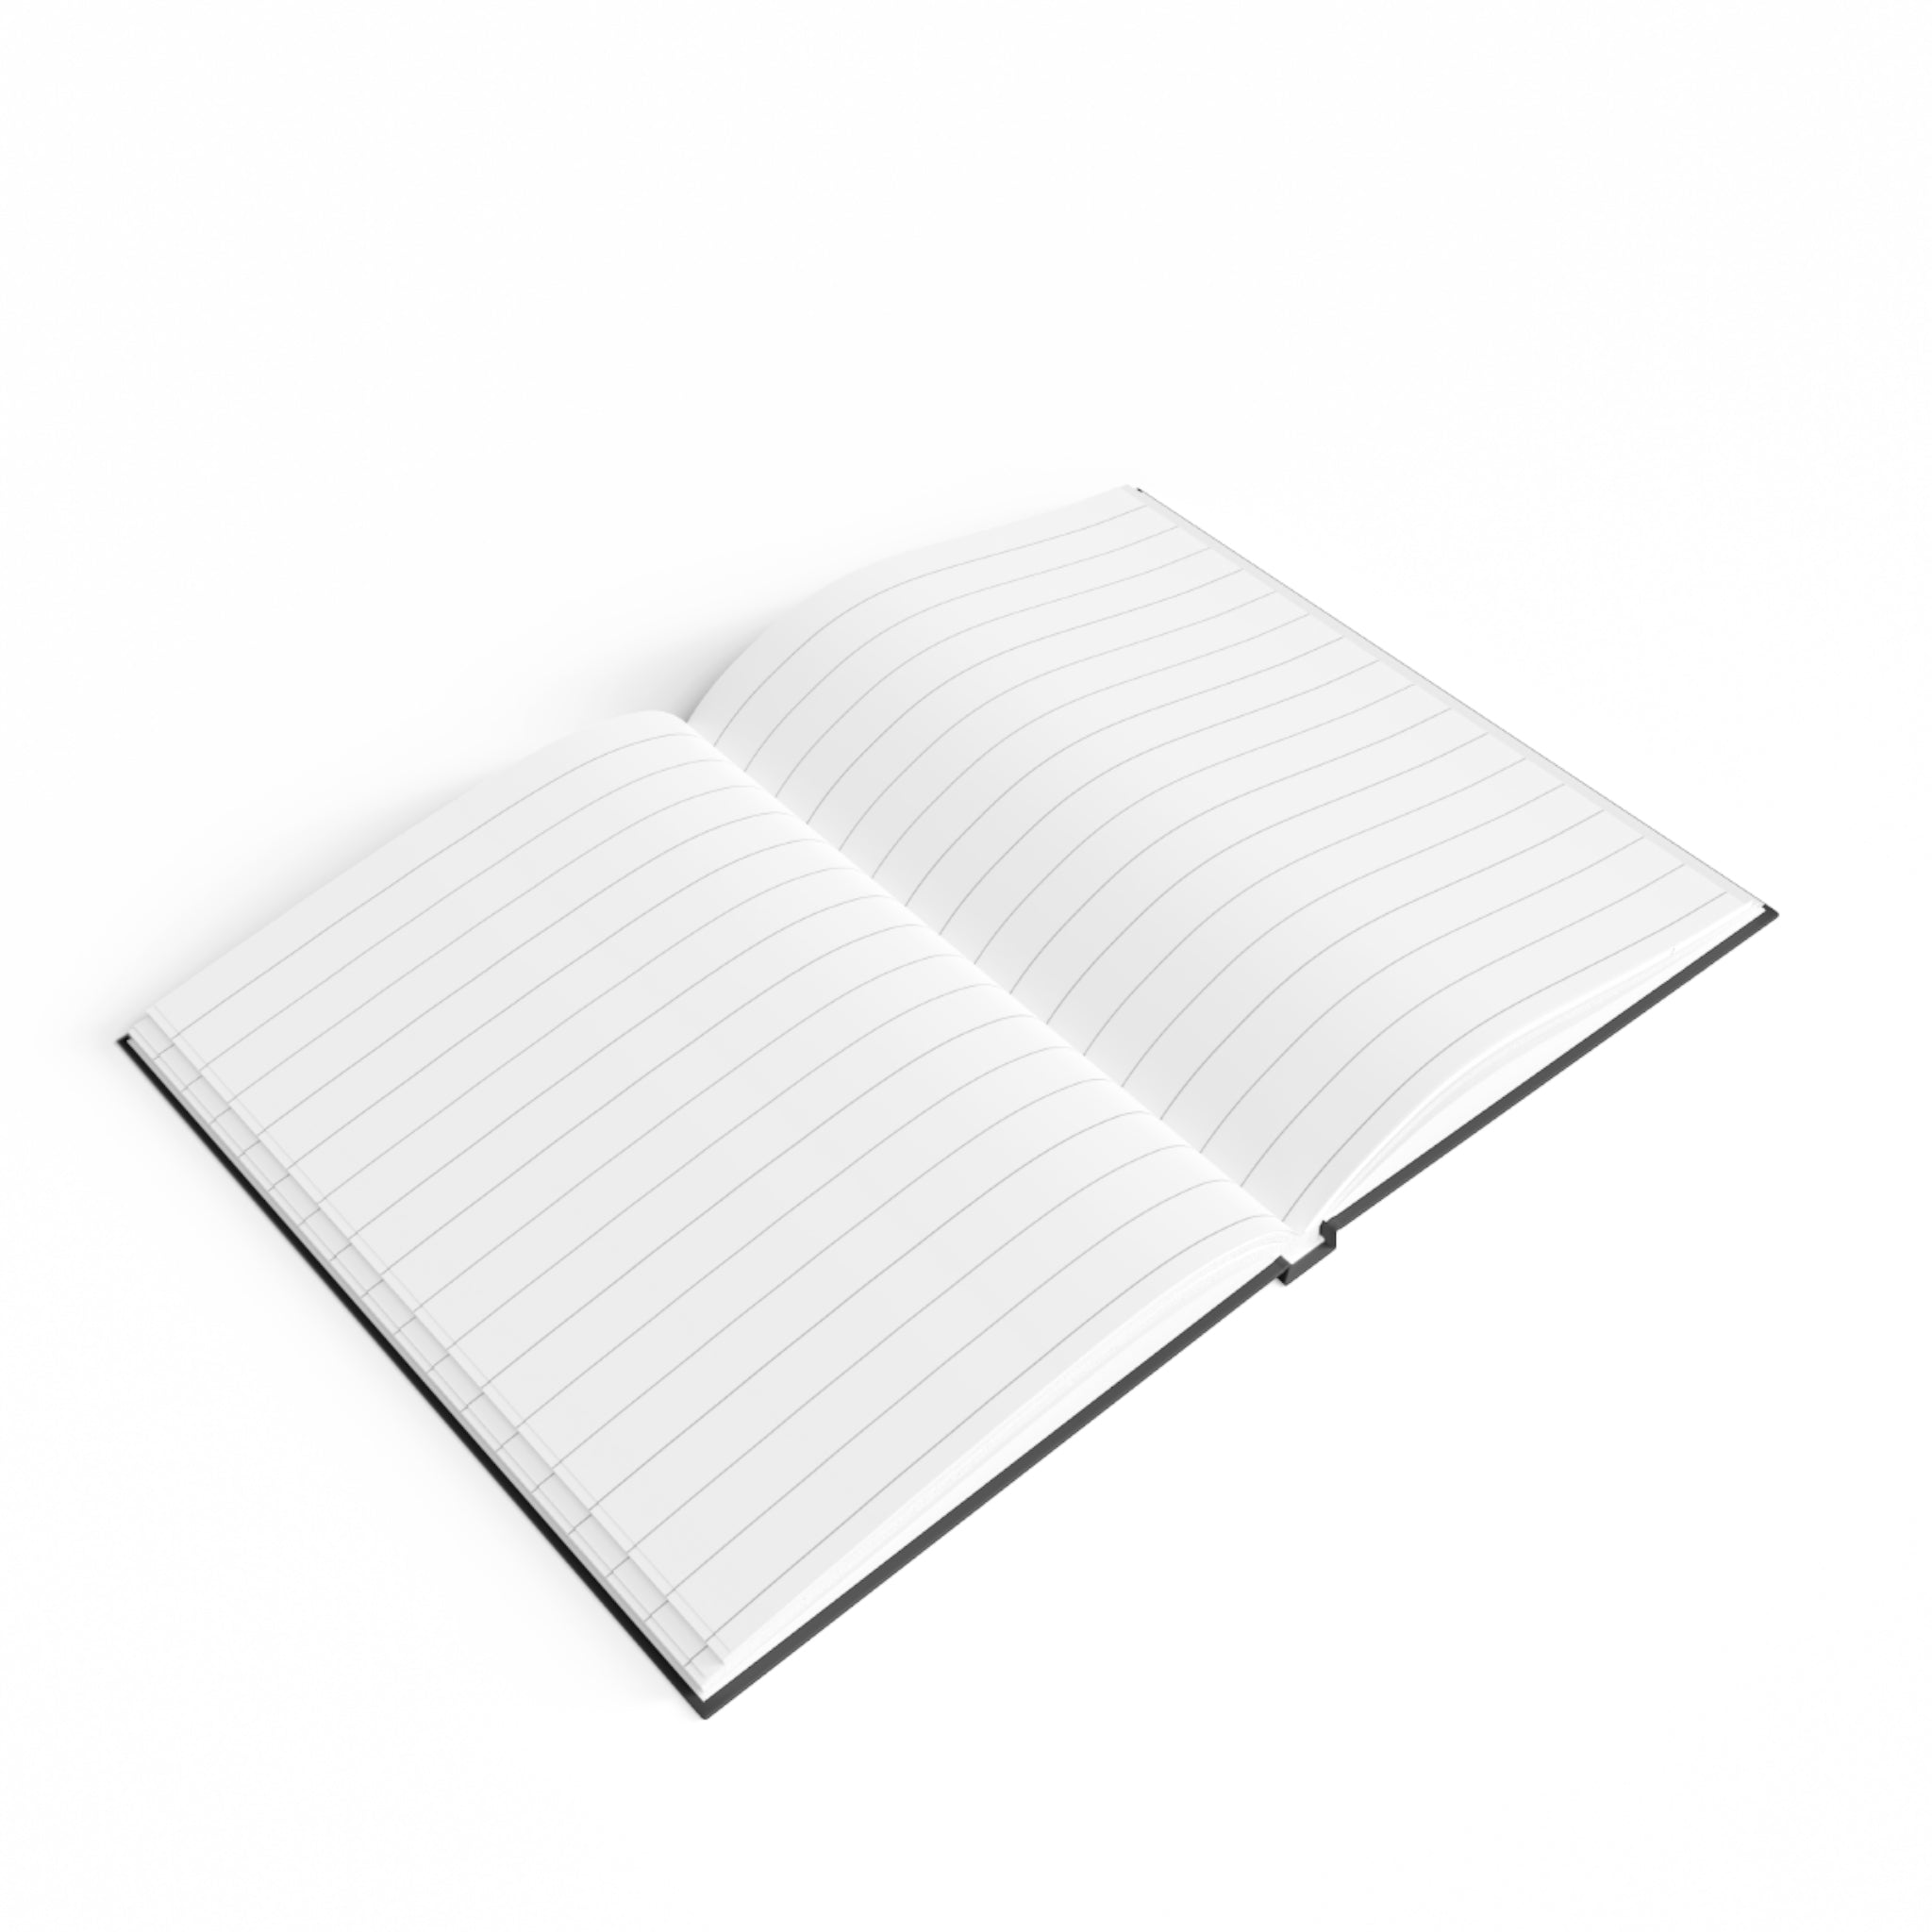 "Bossie" Journal (Black)  - Ruled Line, Lined Notebook, Gratitude Journal